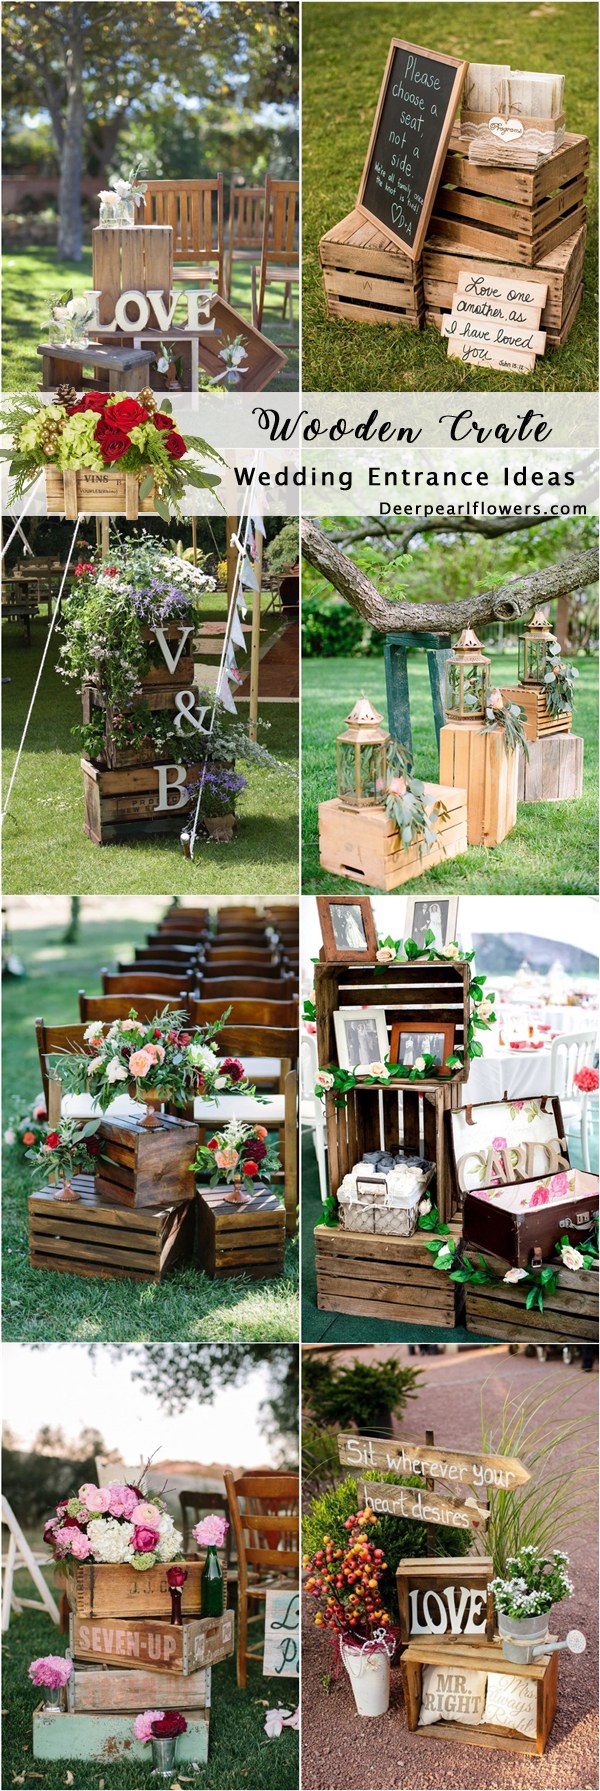 Wooden crate wedding decor ideas